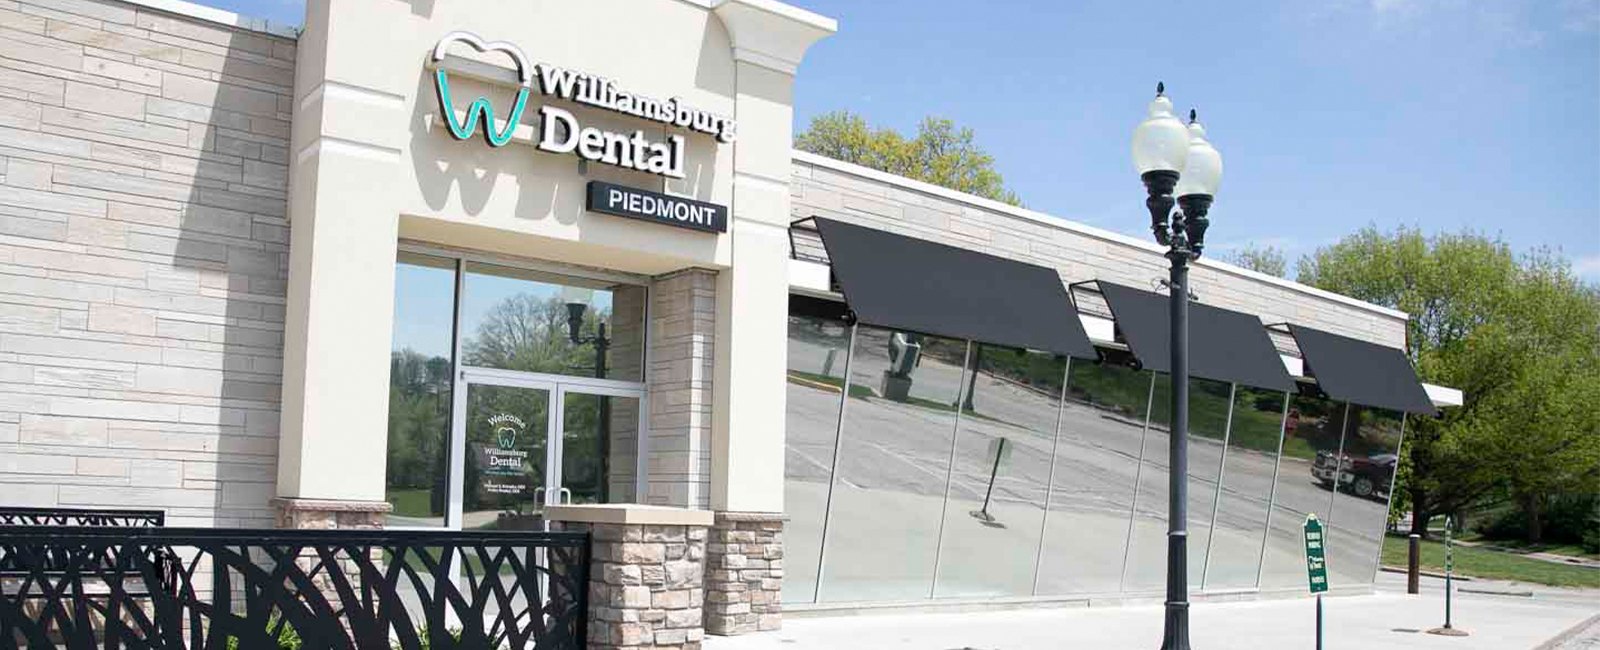 Front entrance of Williamsburg Dental Piedmont